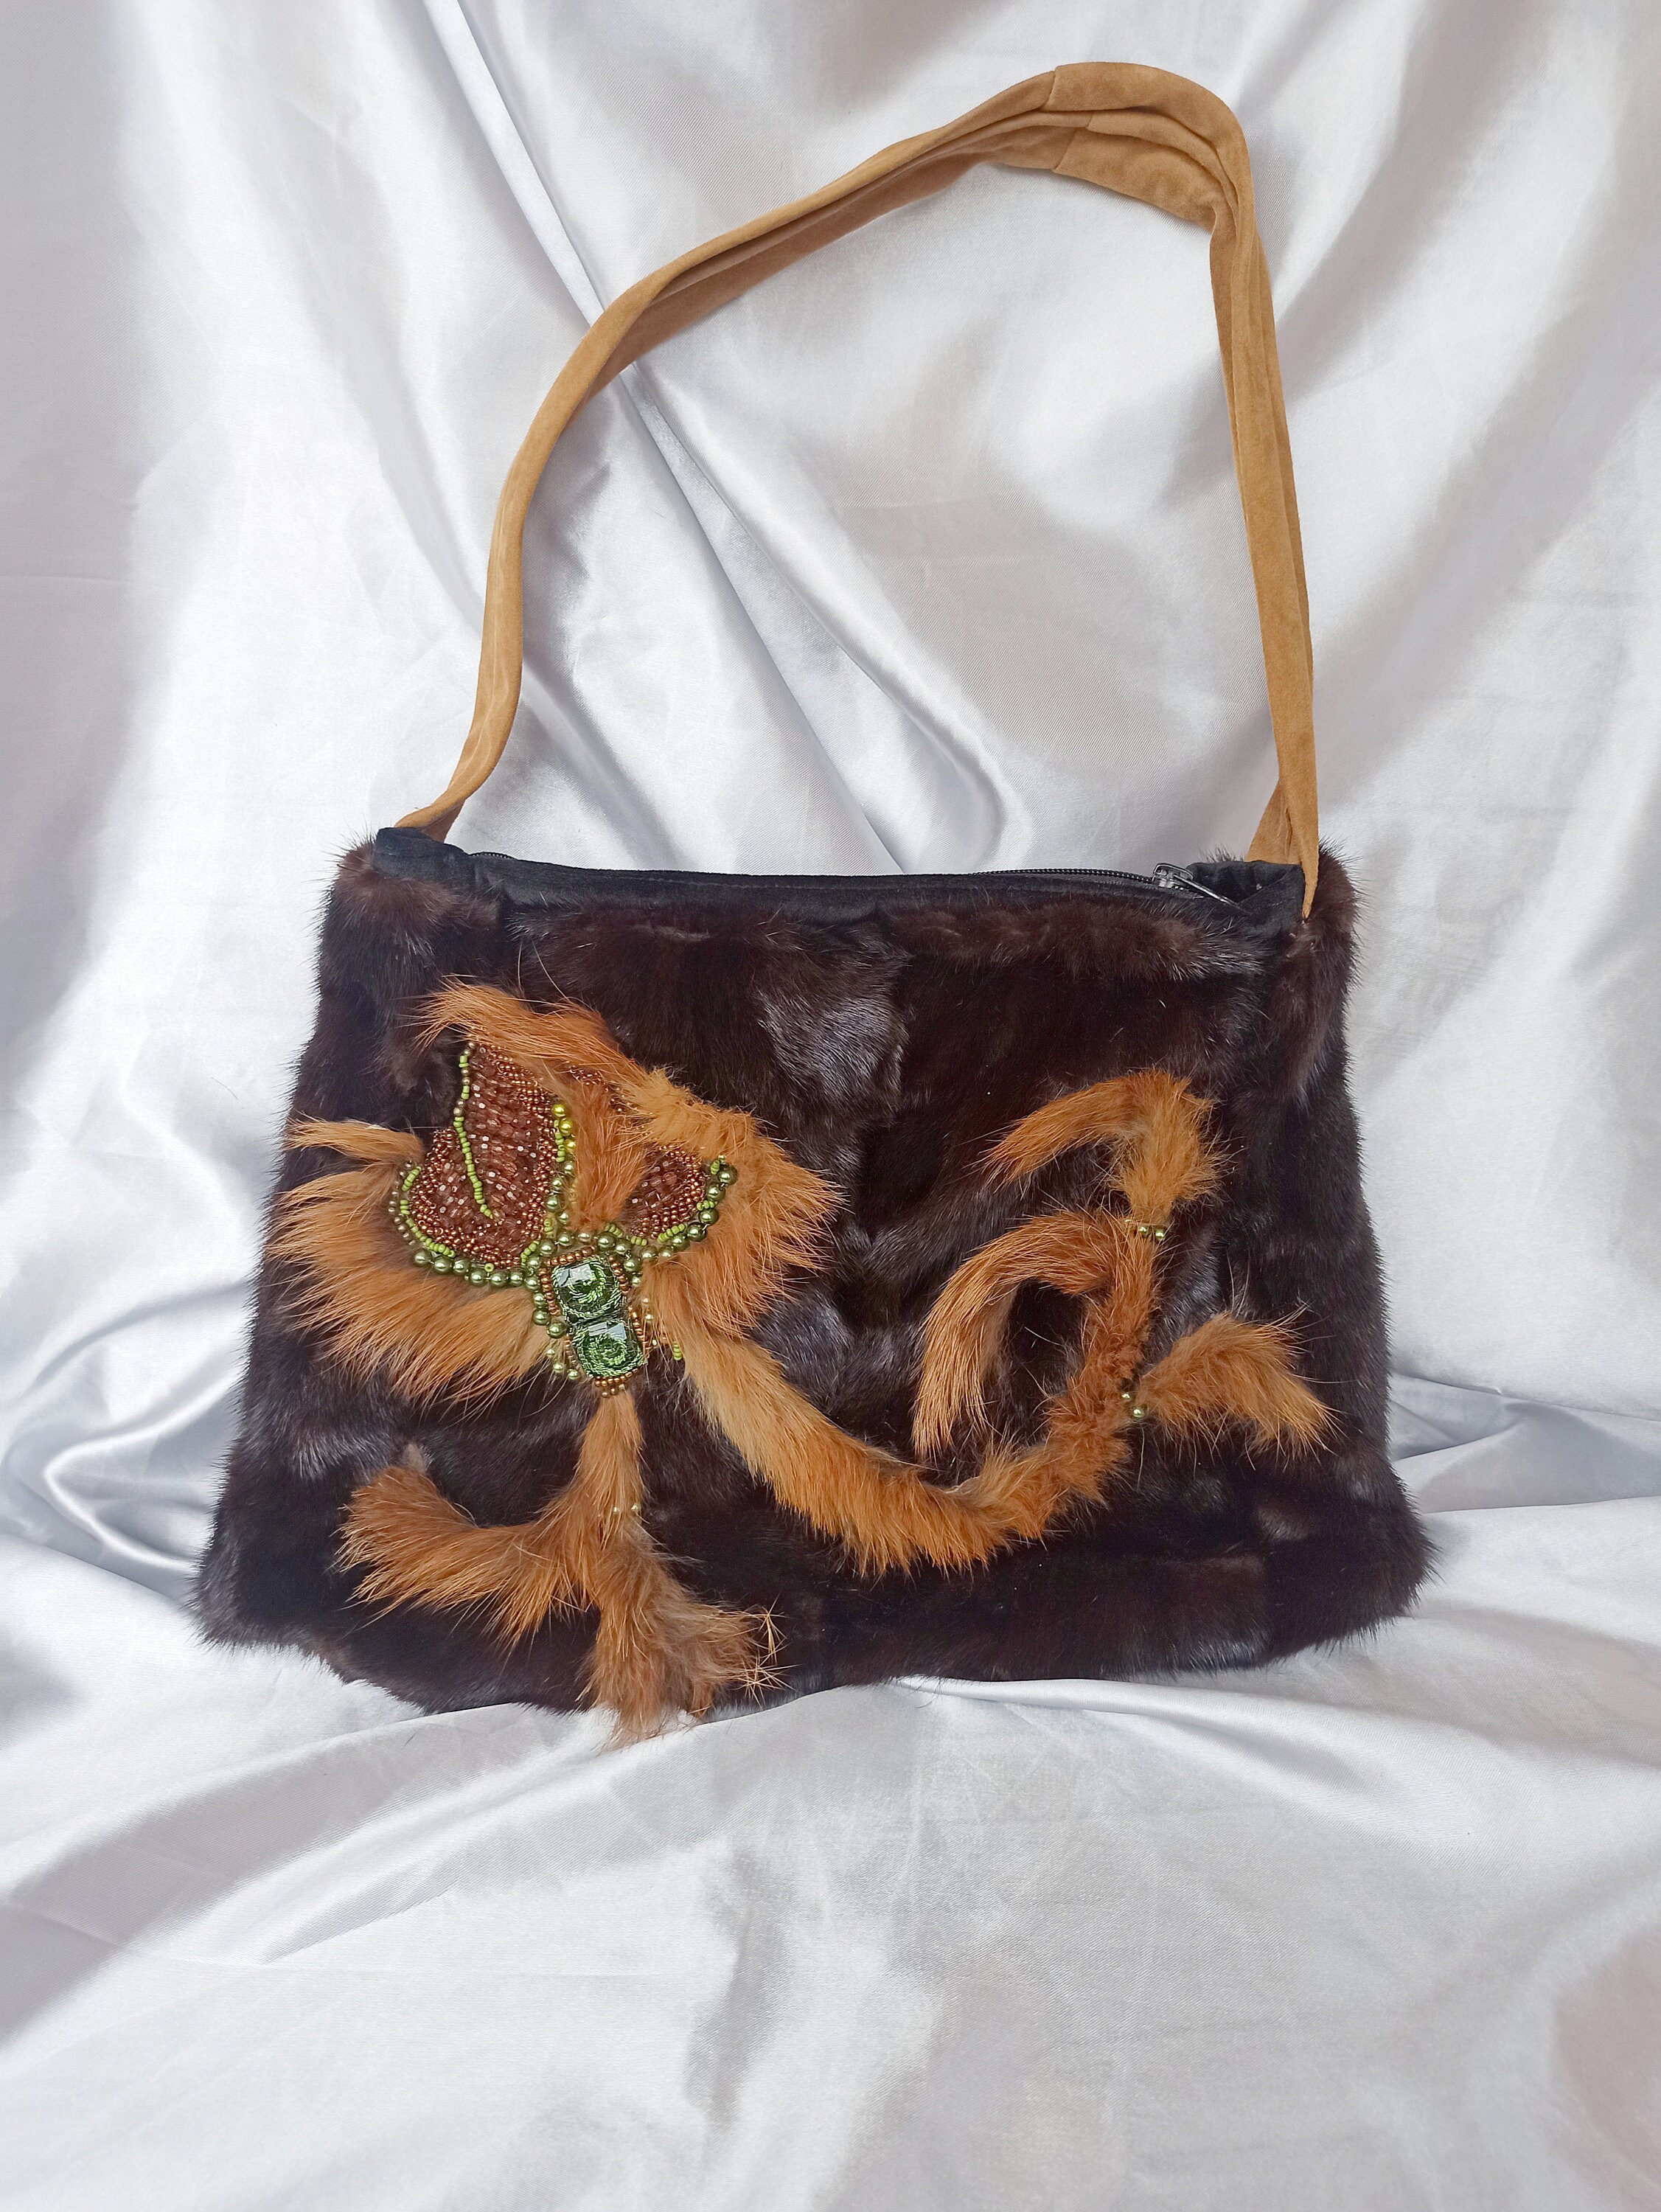 Handbags for Women, Peaoy Faux Leather Purse Ladies Handbag Vintage  Designer Handbags Shoulder Bag Hollow Out Design with Fine Pendant Fashion  Tote Bag 